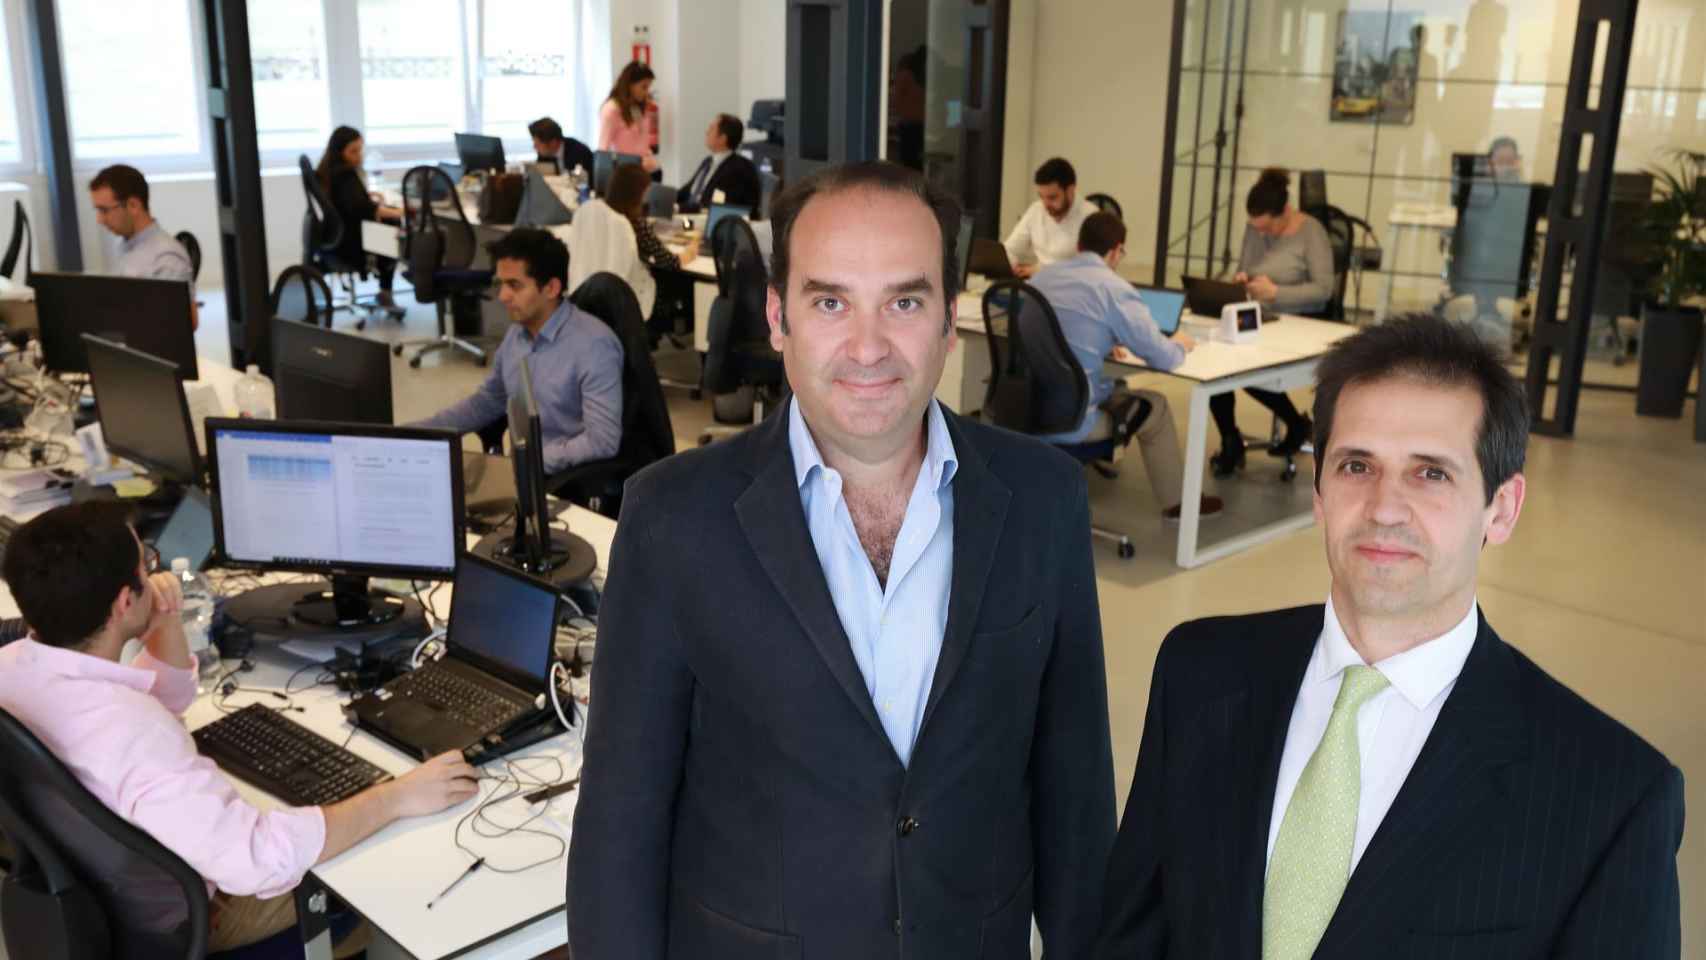 Alfonso De León Y Francisco Velazquez, socios de la firma de Venture Capital Axon